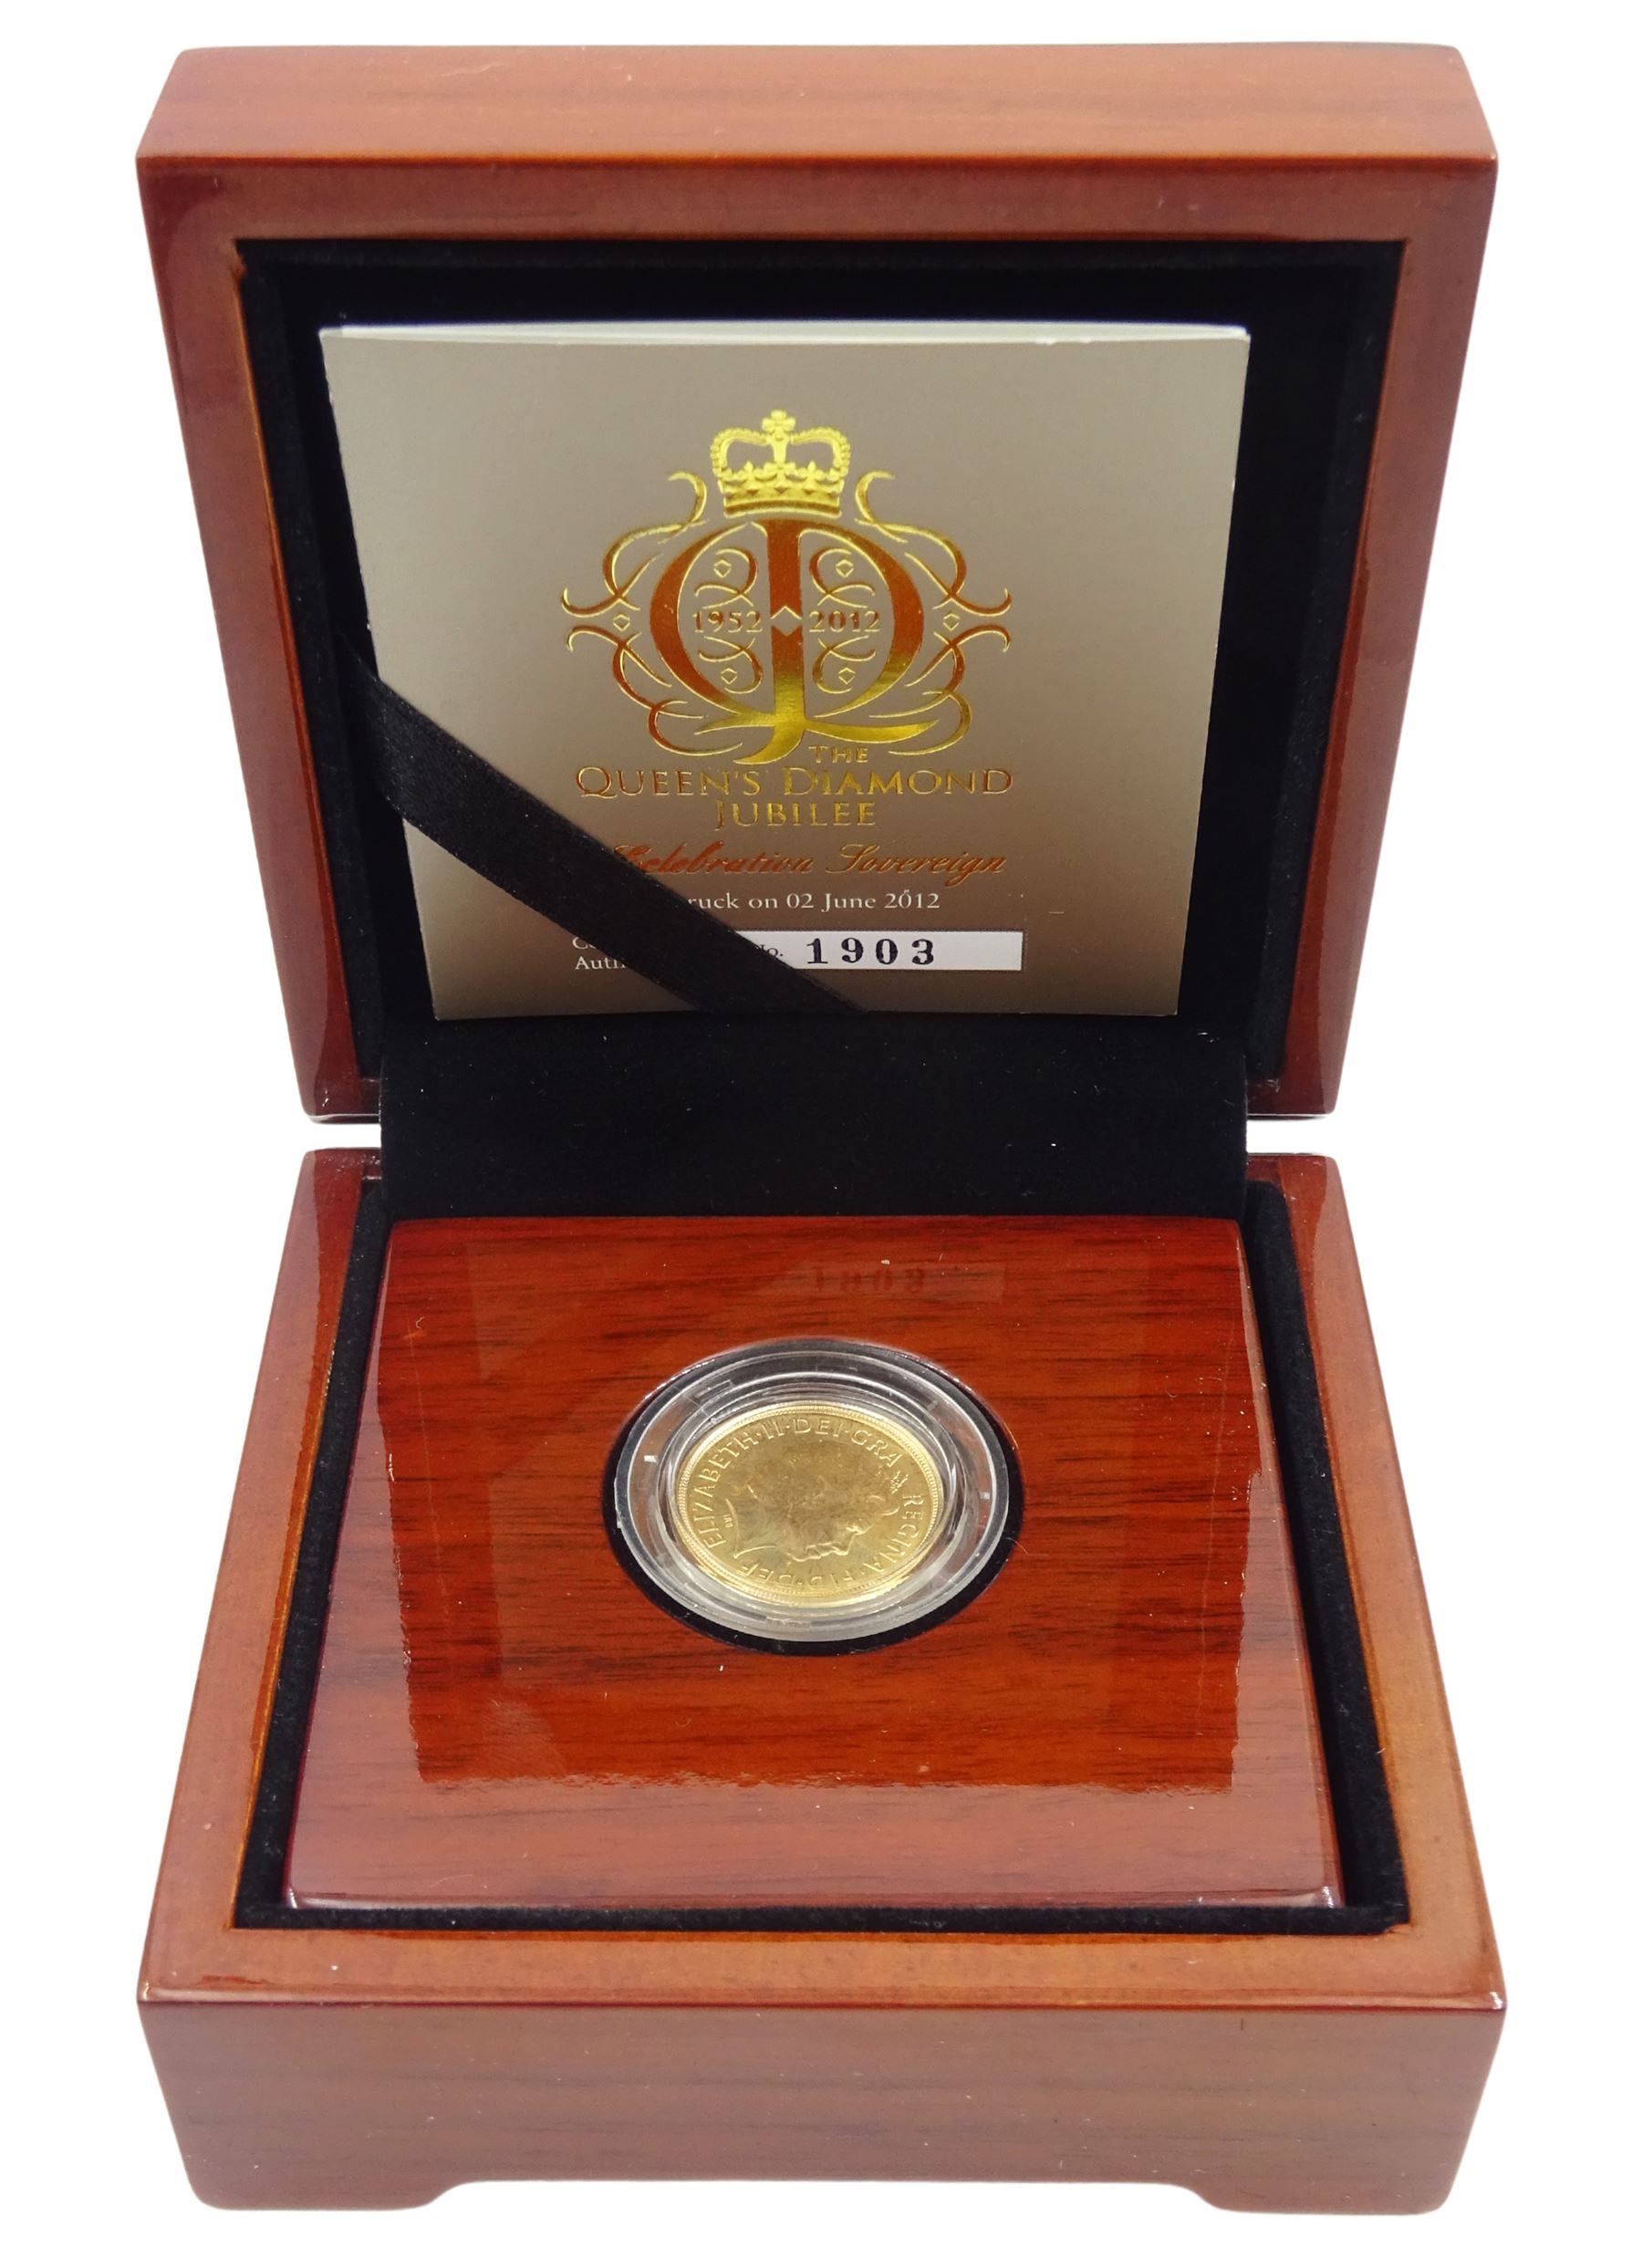 Queen Elizabeth II 2012 Diamond Jubilee celebration gold full sovereign coin